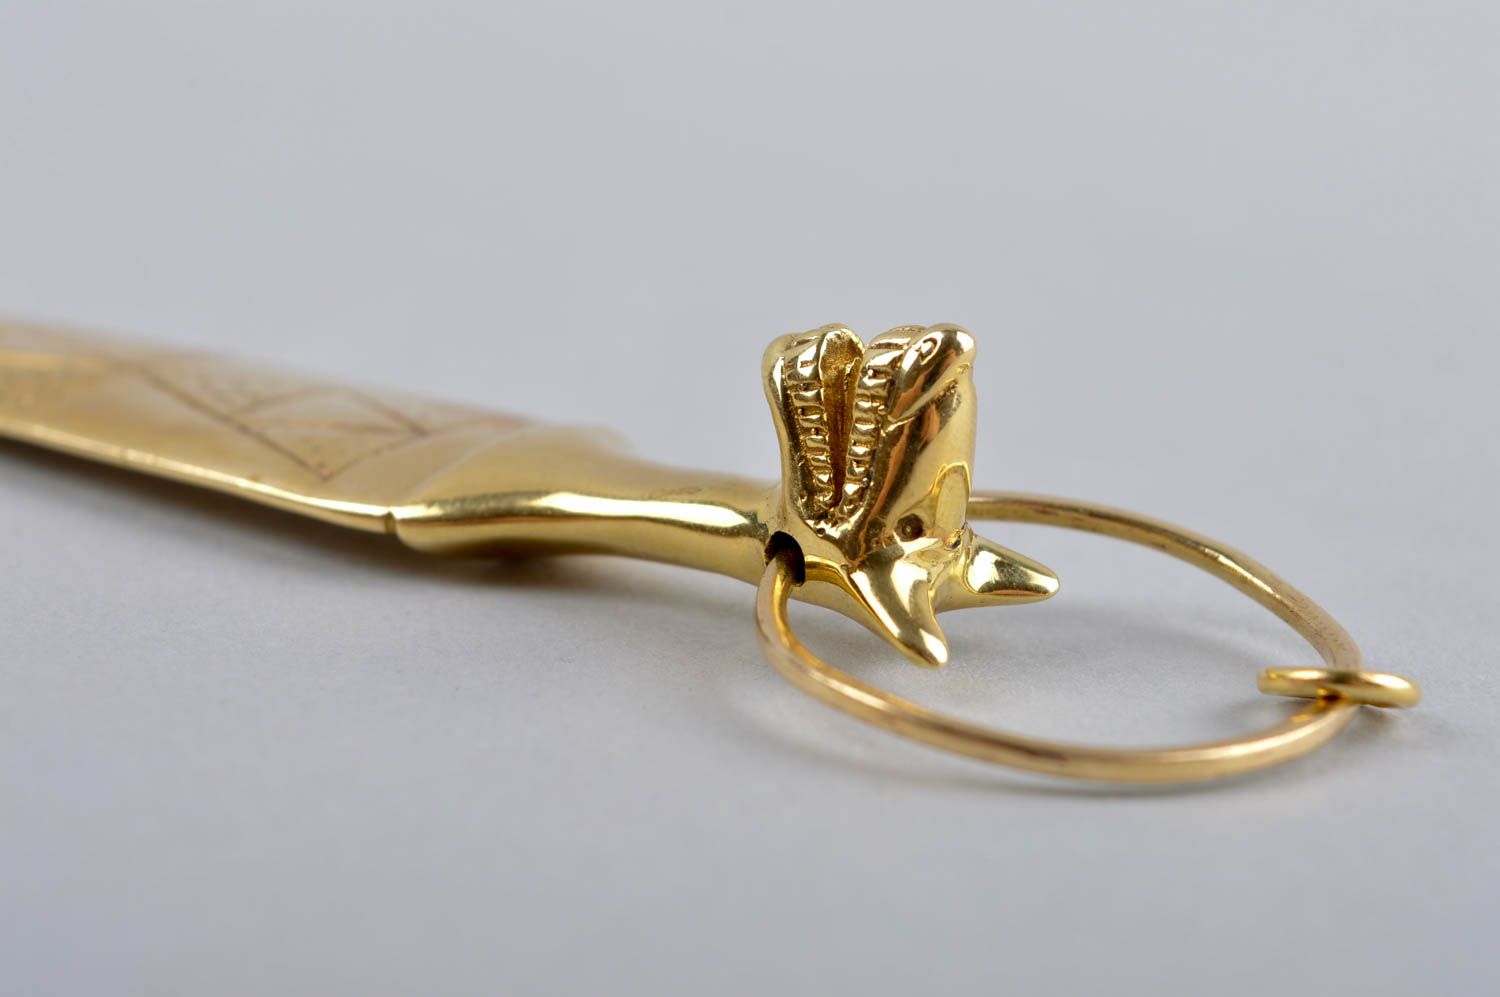 Handmade brass pendant metal jewelry brass accessories fashion jewelry photo 4